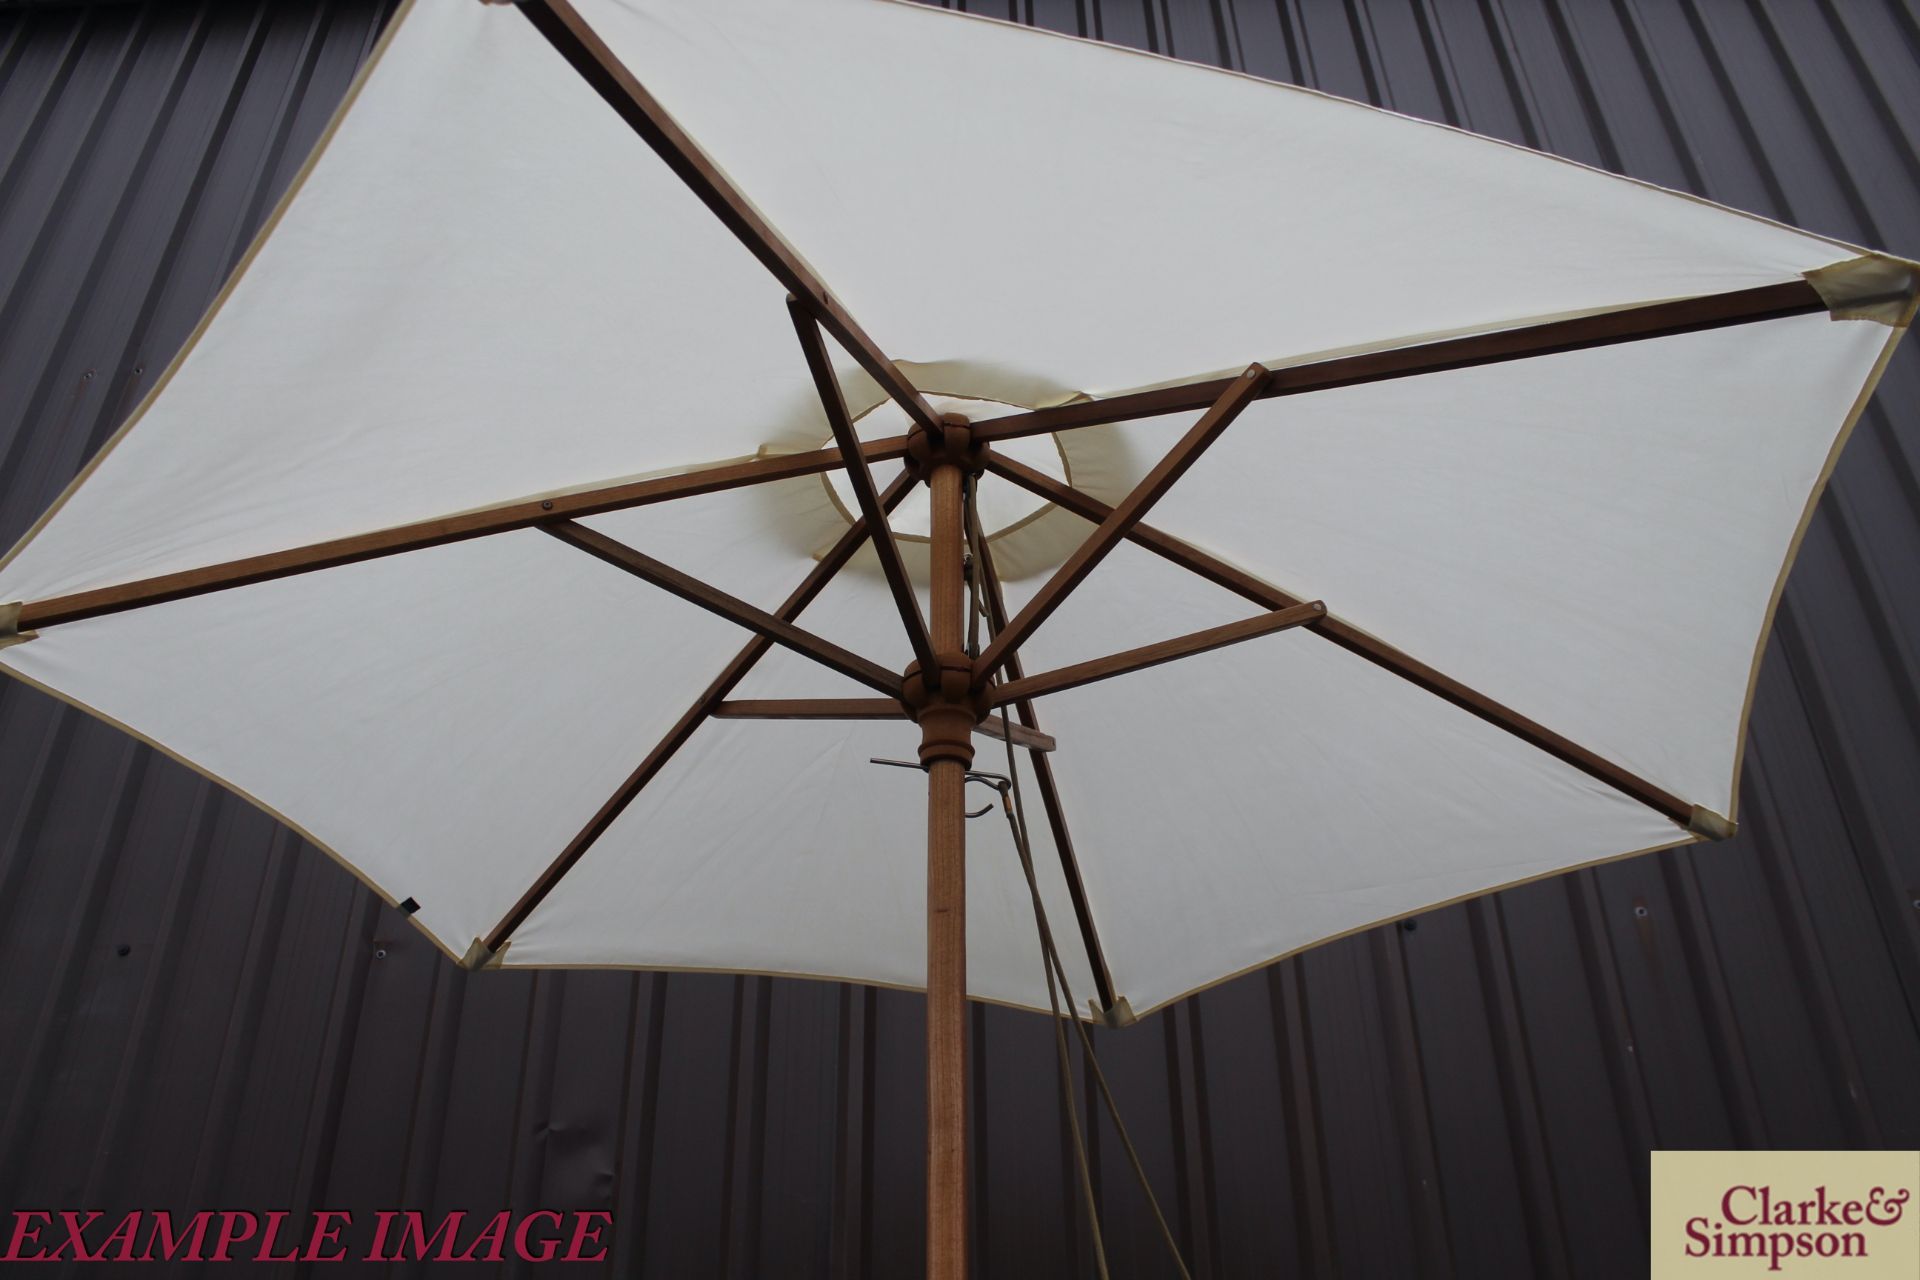 2x Sturdi 2m natural parasols. No bases. - Image 3 of 4